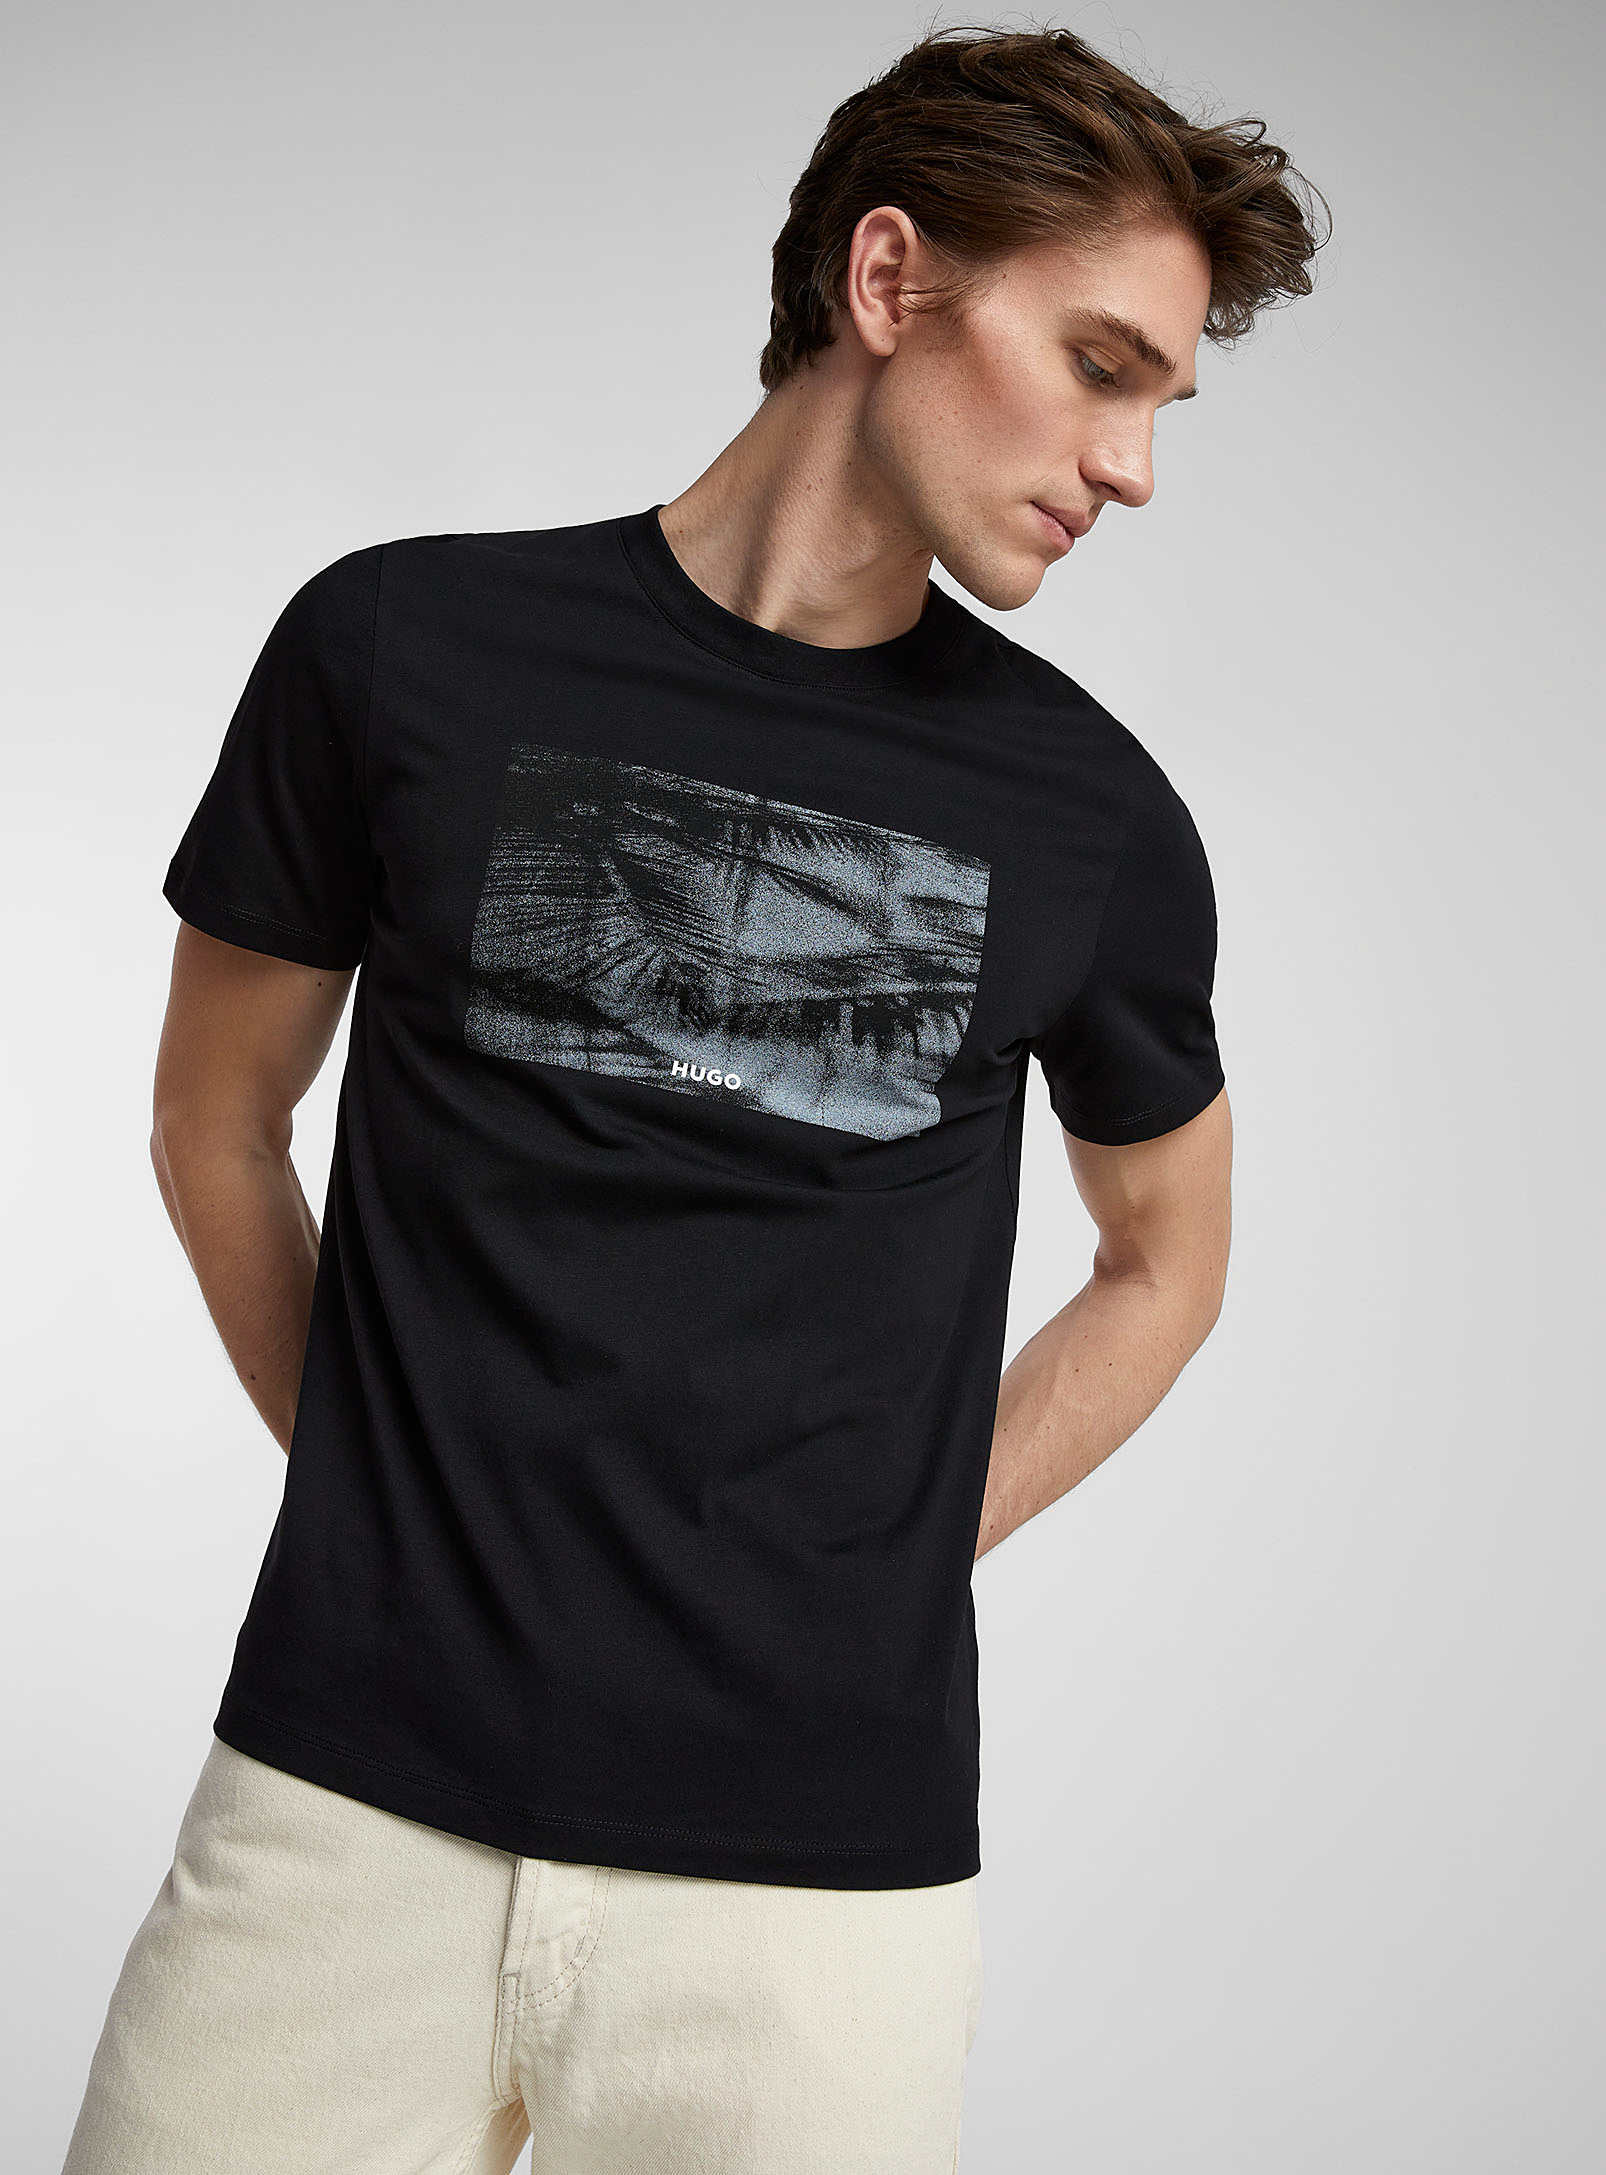 HUGO - Le t-shirt monochrome silhouettes tropicales